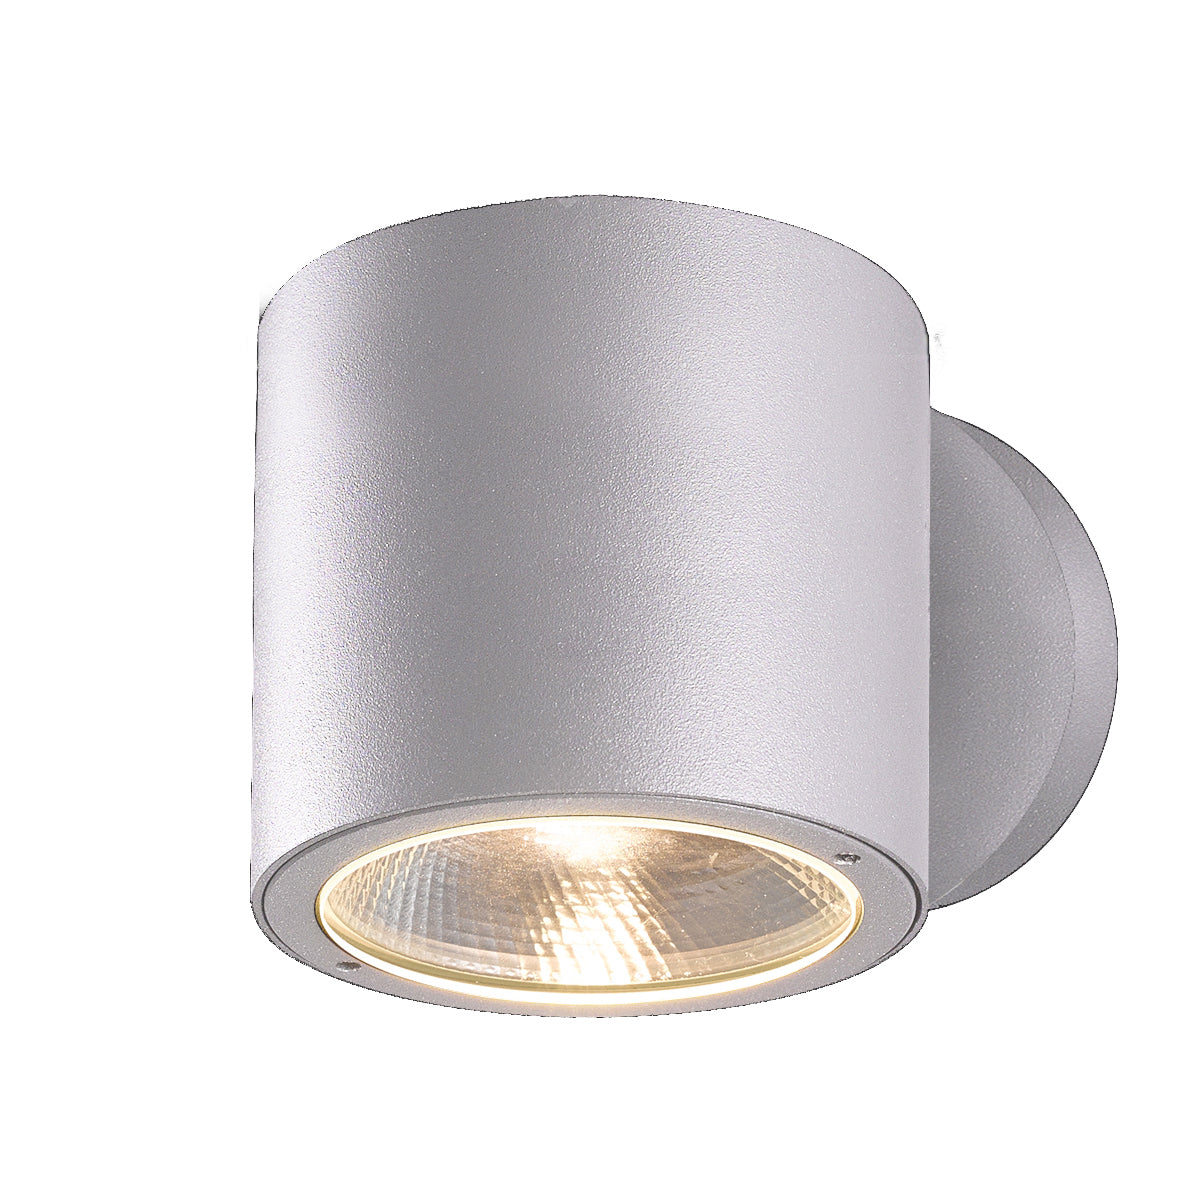 VOLUME Outdoor sconce Aluminum - 28292-012 INTEGRATED LED | EUROFASE